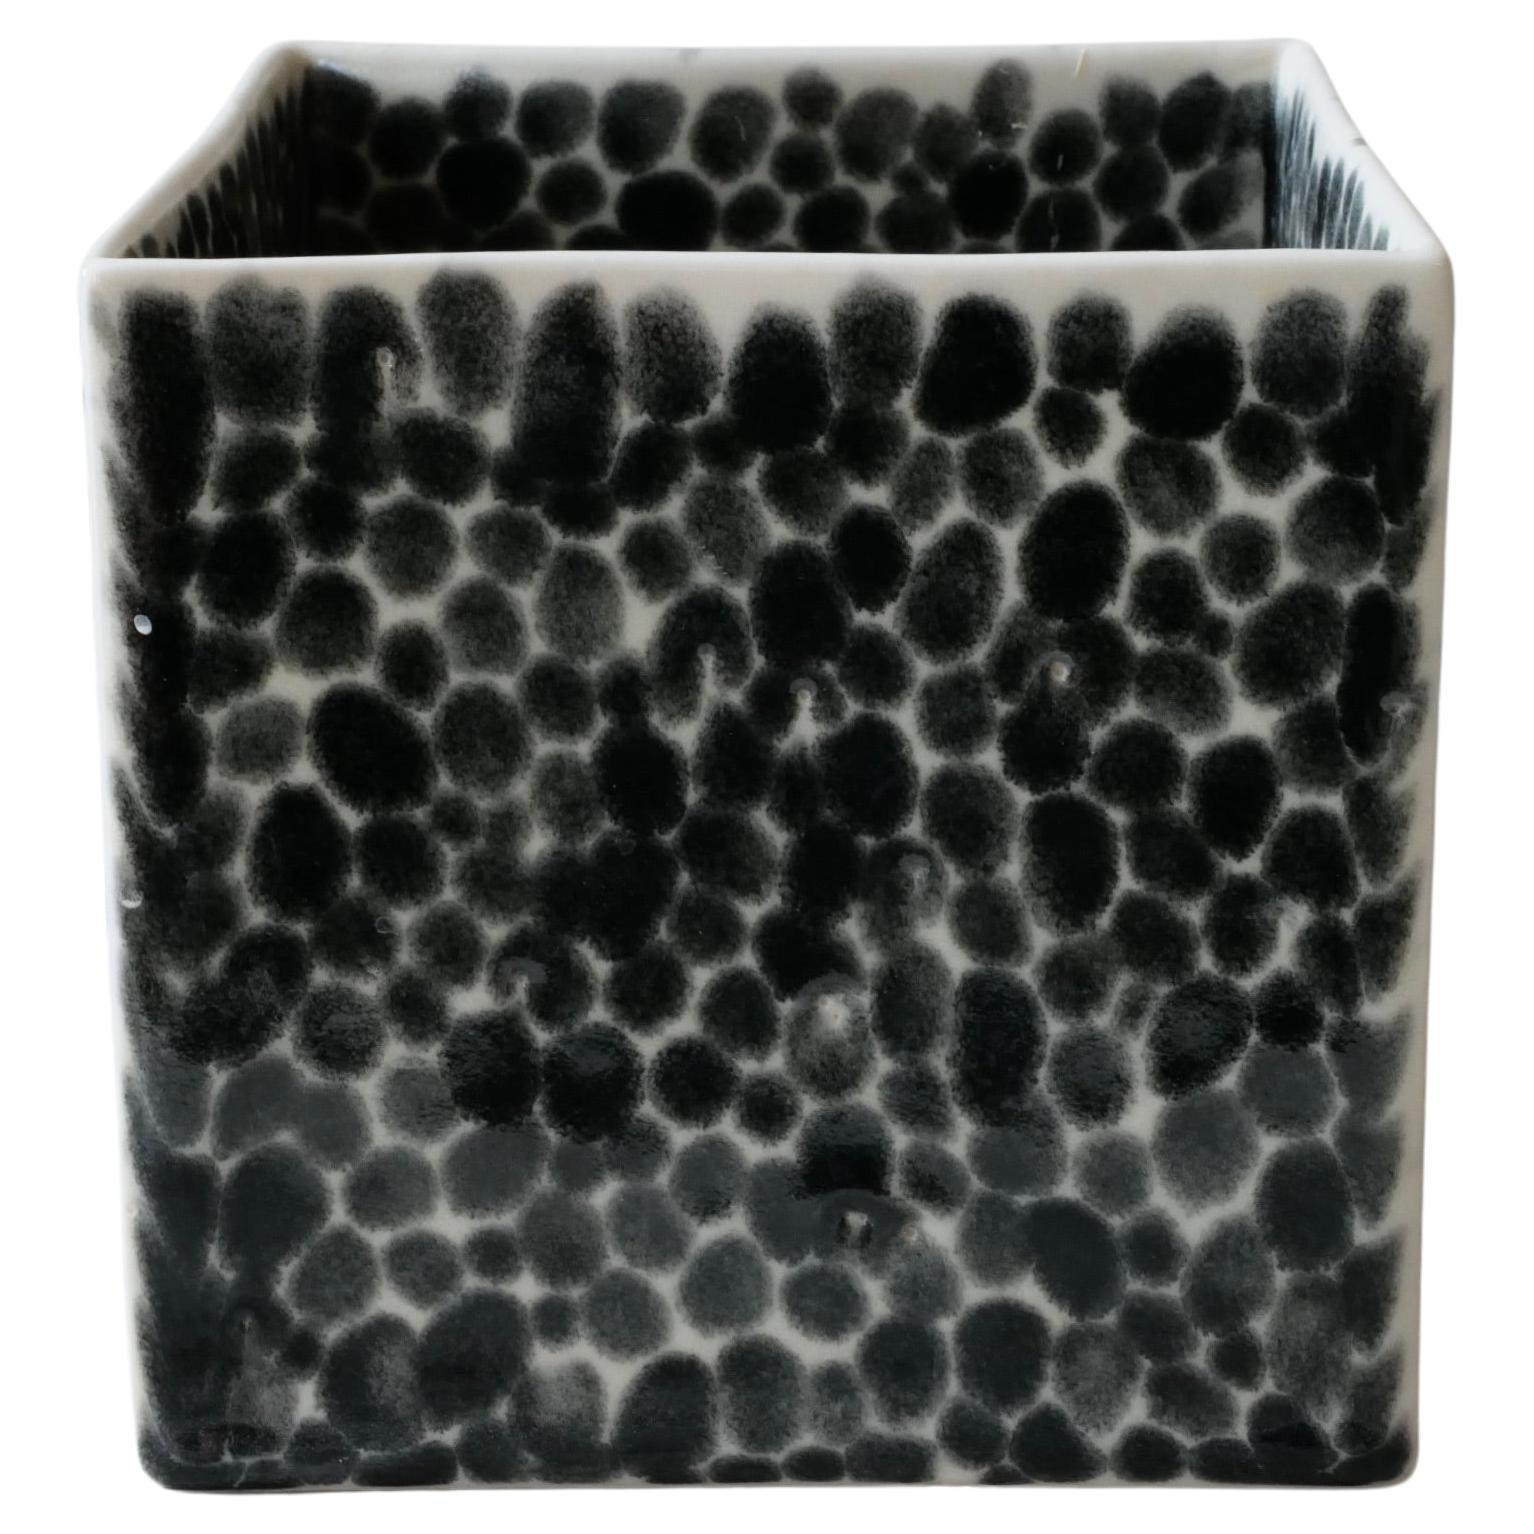 Black Dots Porcelain Cube Vase by Lana Kova